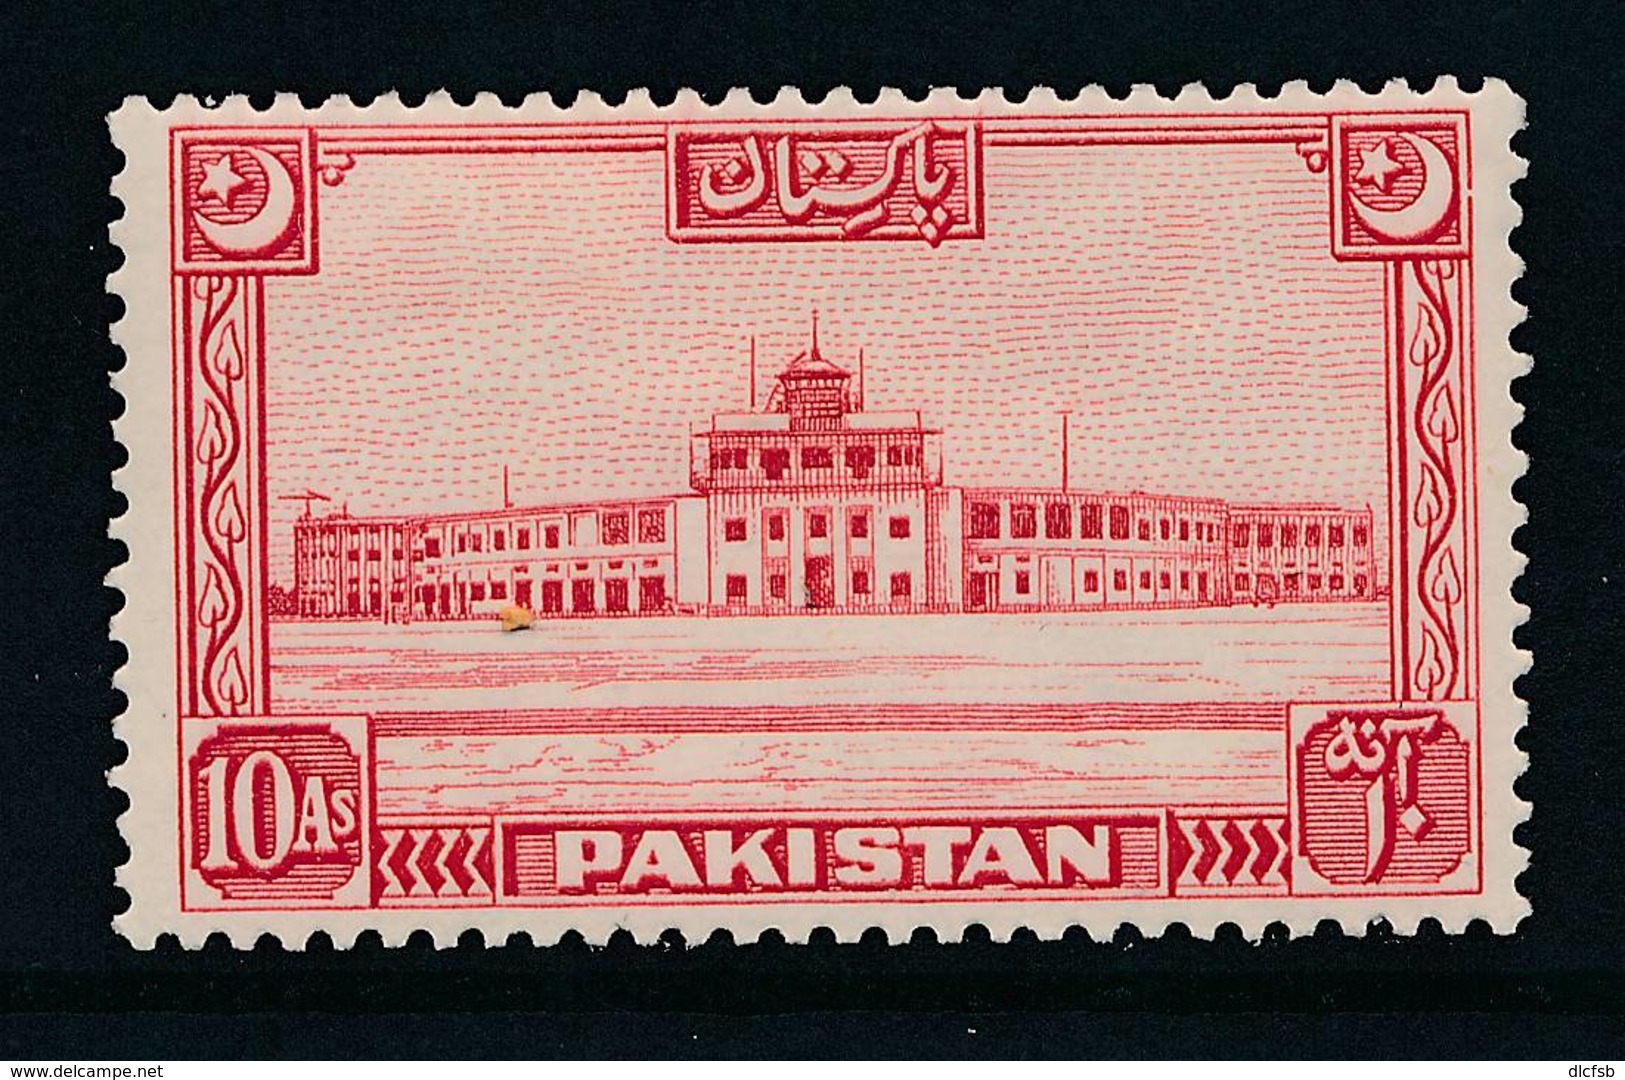 PAKISTAN, 1949 10As (crescent Points To Left) Very Fine MM, SG50, Cat £25 - Pakistan